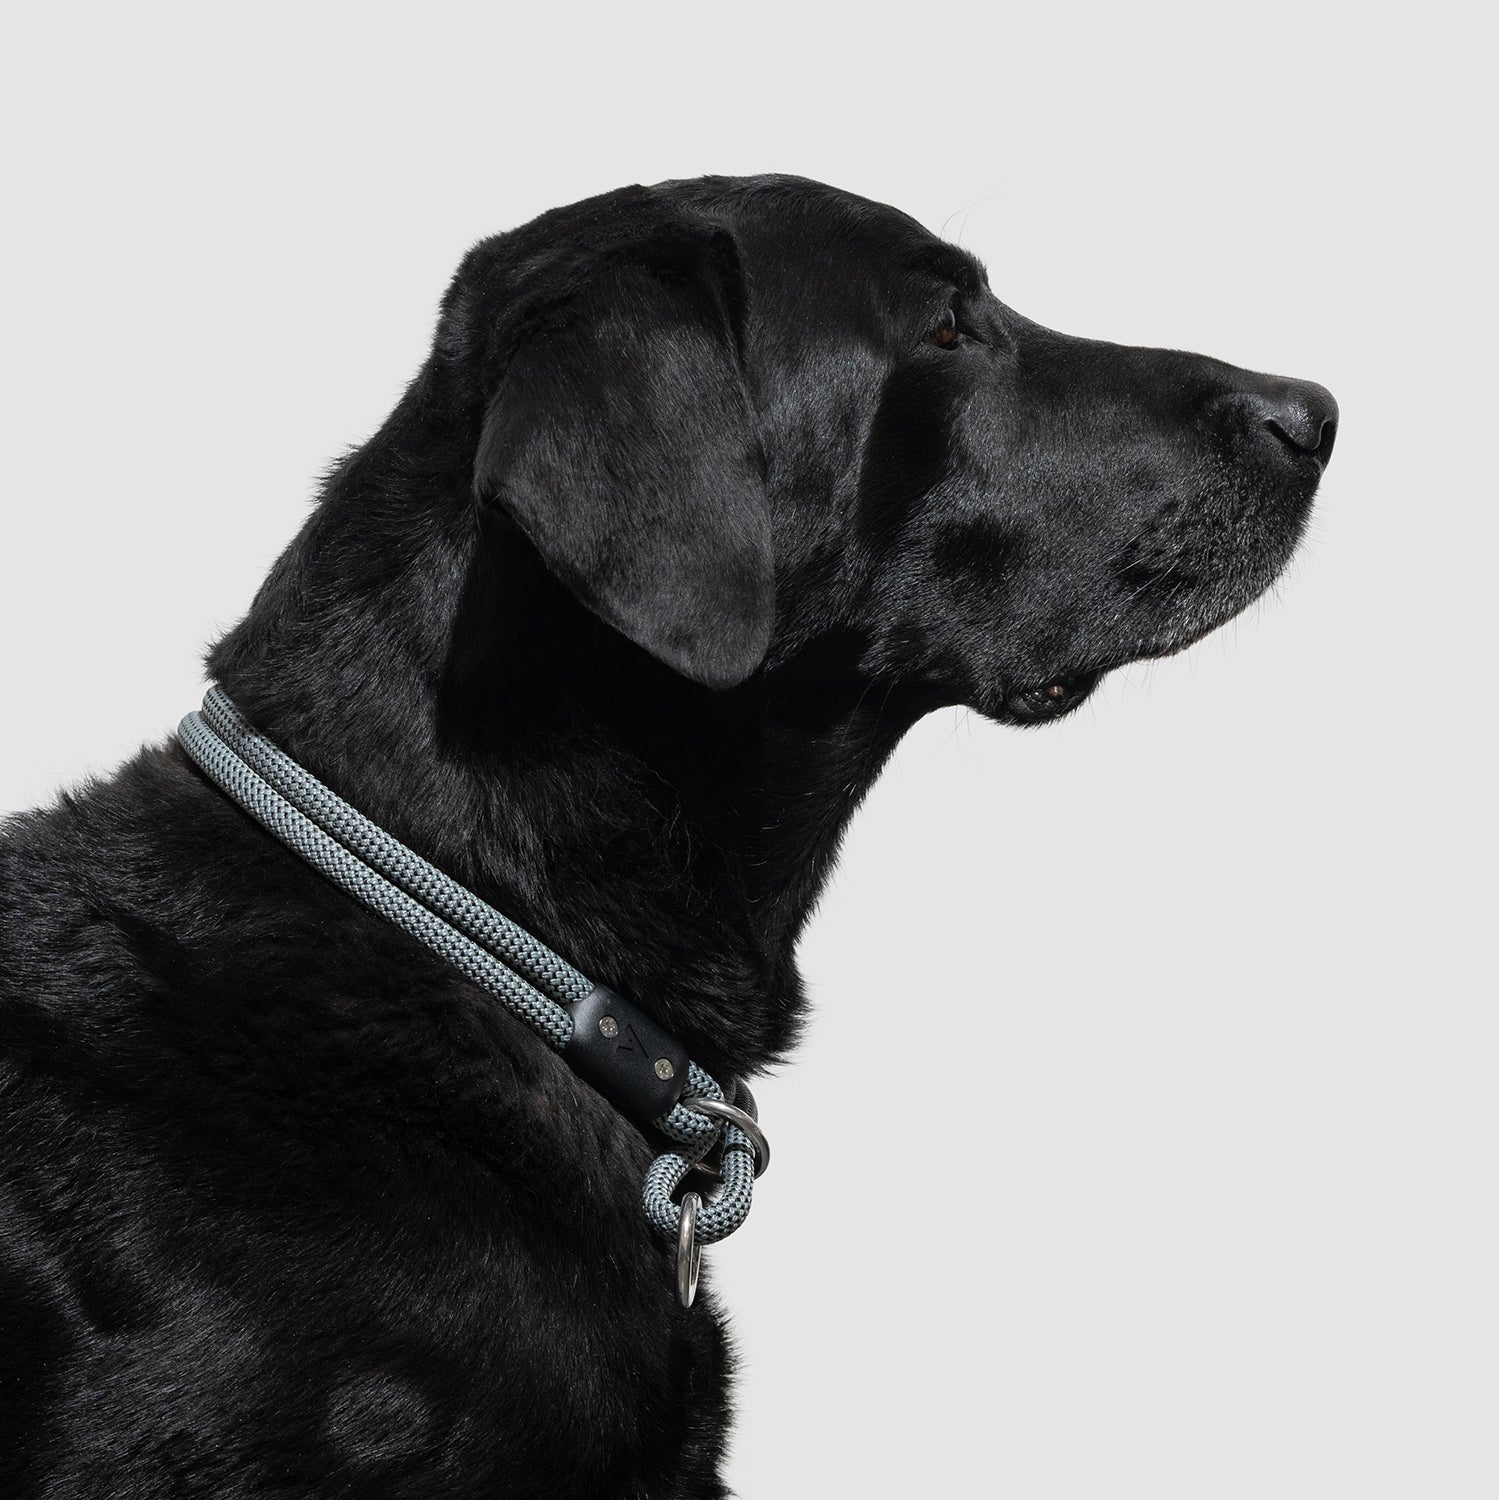 atlas pet company lifetime slip collar training collar for active pups handmade in colorado with lifetime warranty --silver